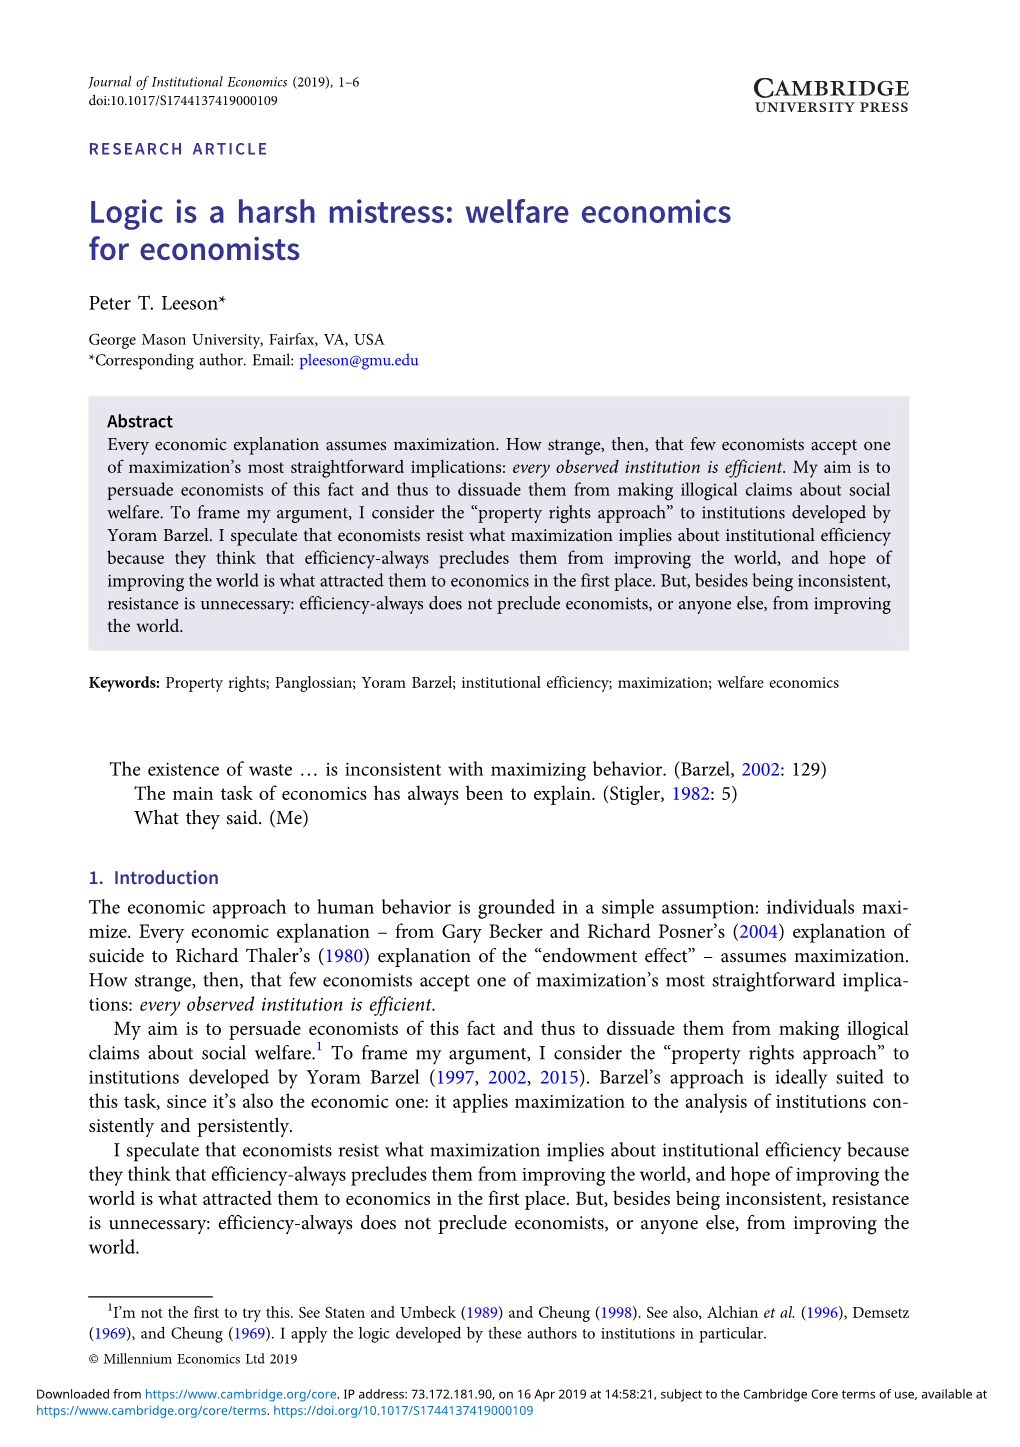 Logic Is a Harsh Mistress: Welfare Economics for Economists